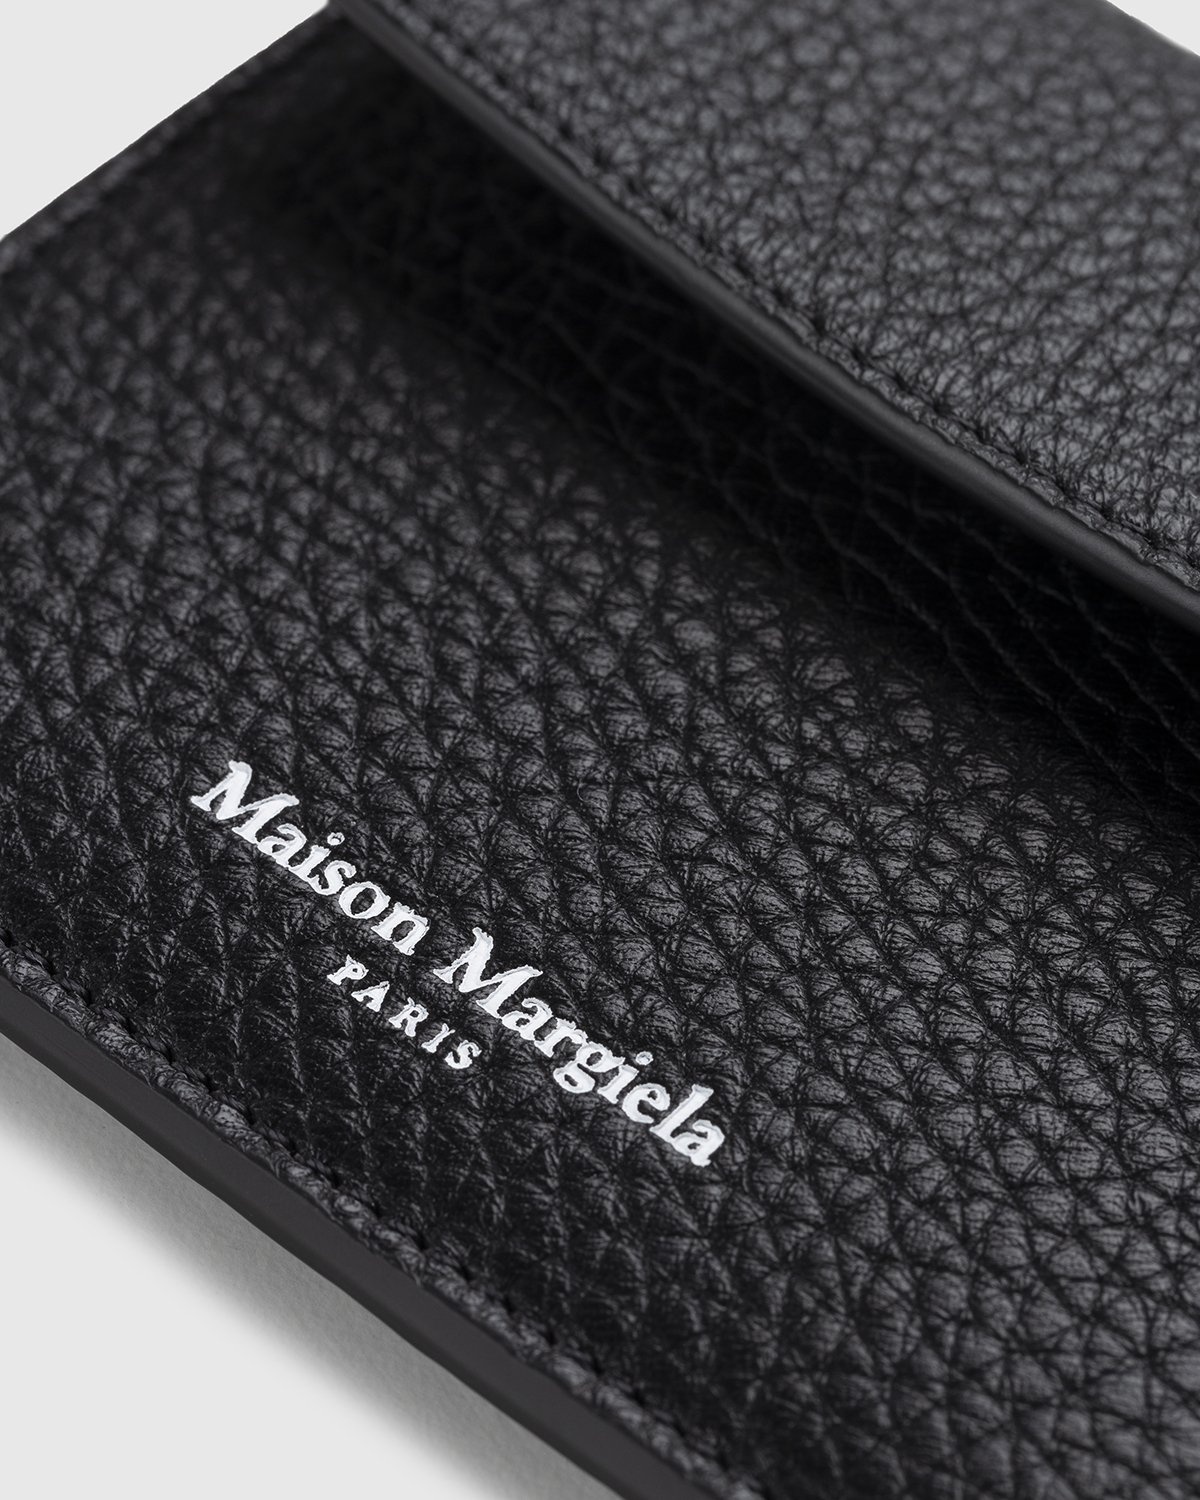 Maison Margiela – Coin and Card Holder Black - Wallets - Black - Image 3